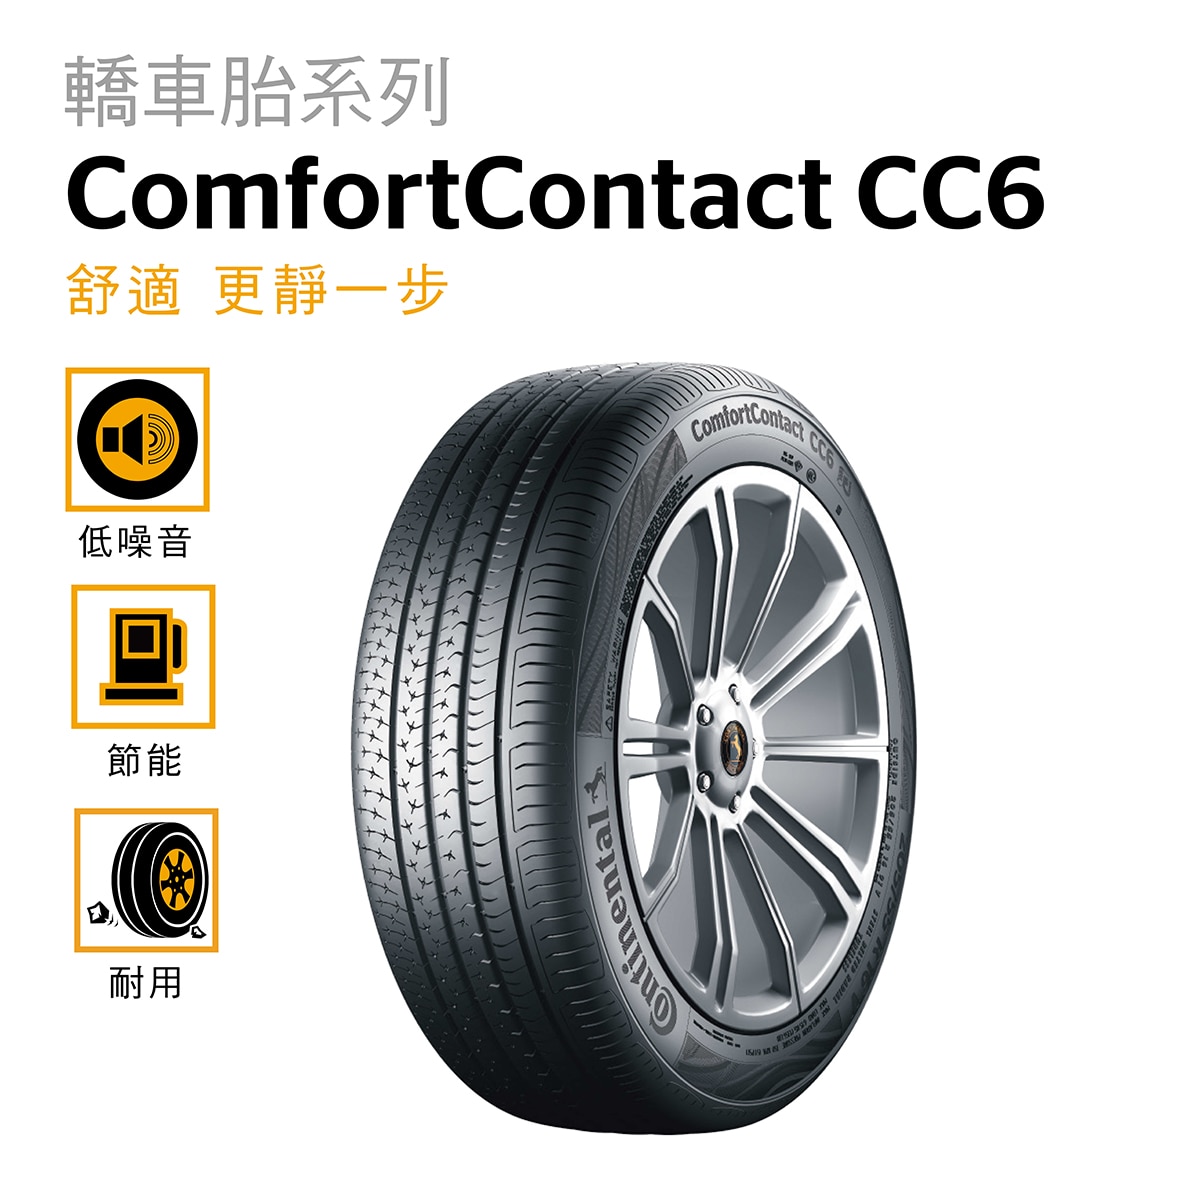 Continental 馬牌輪胎Comfort Contact CC6適用於一般轎車，輪胎特殊路面貼地配方，不僅能夠適應粗糙的路面，減緩震動的同時與能達到優異的油耗表現，消音艙與變頻降噪器則能有效降低不適音頻以及音量，打造舒適安靜的駕駛體驗。